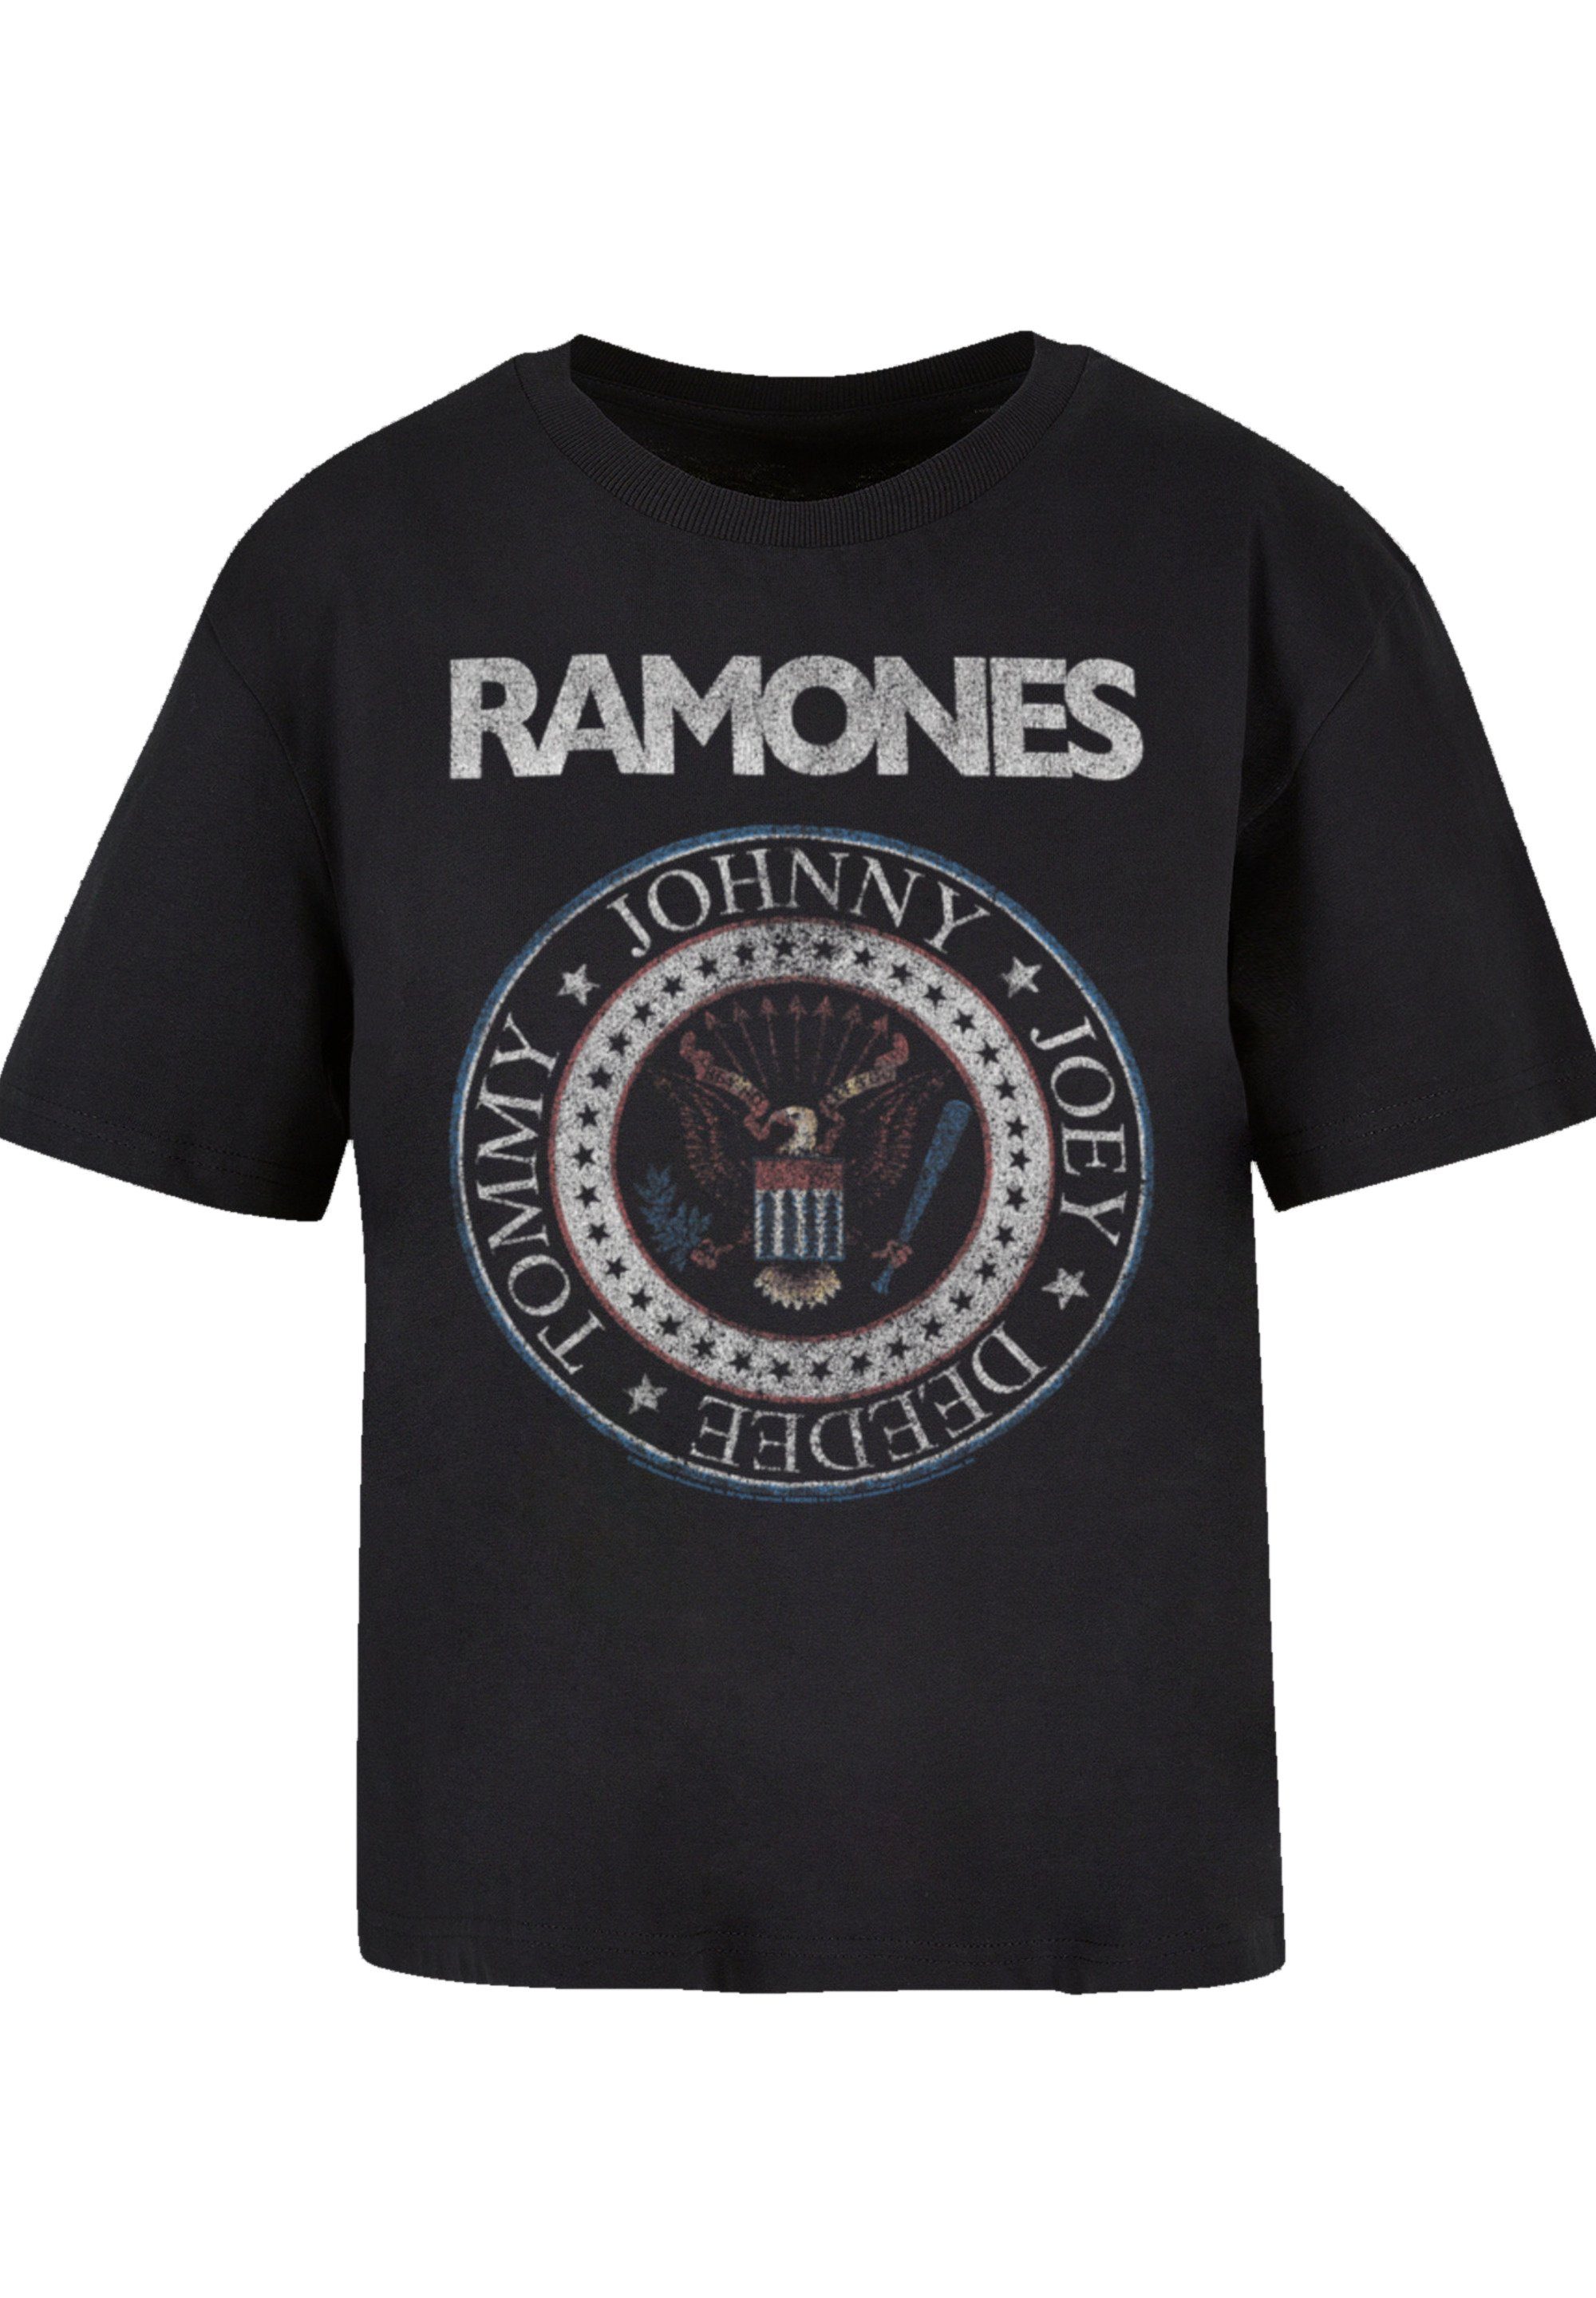 T-Shirt kombinierbar F4NT4STIC Band Red Rock-Musik, und Komfortabel Band, Ramones White Qualität, vielseitig Seal Musik Rock And Premium